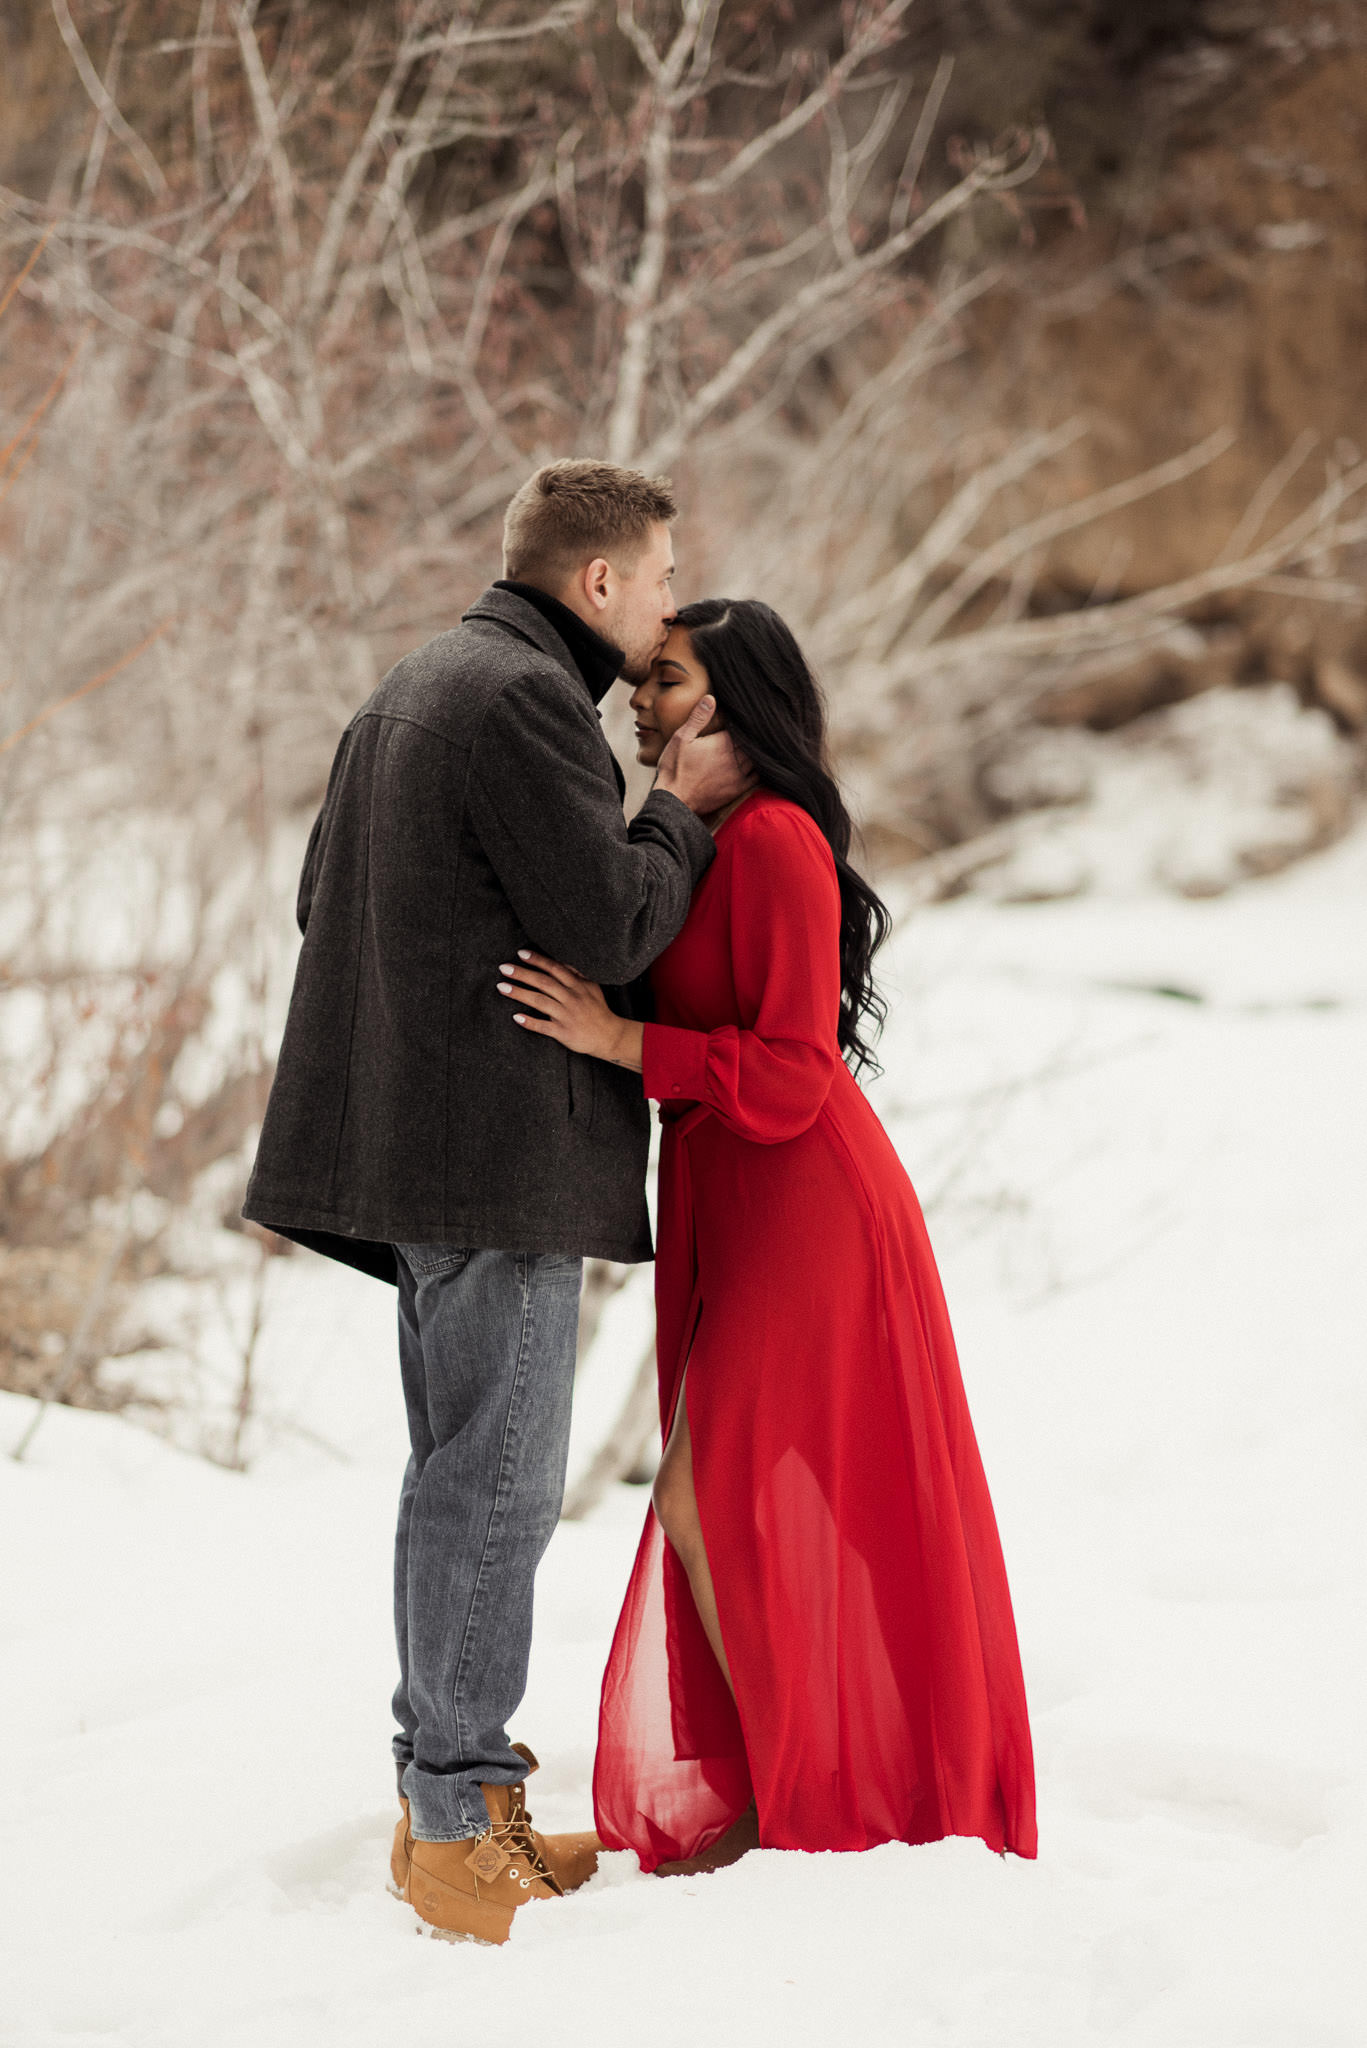 sandra-ryan-colorado-winter-snow-engagement-couples-valentines-red-houston-photographer-sm-2.jpg